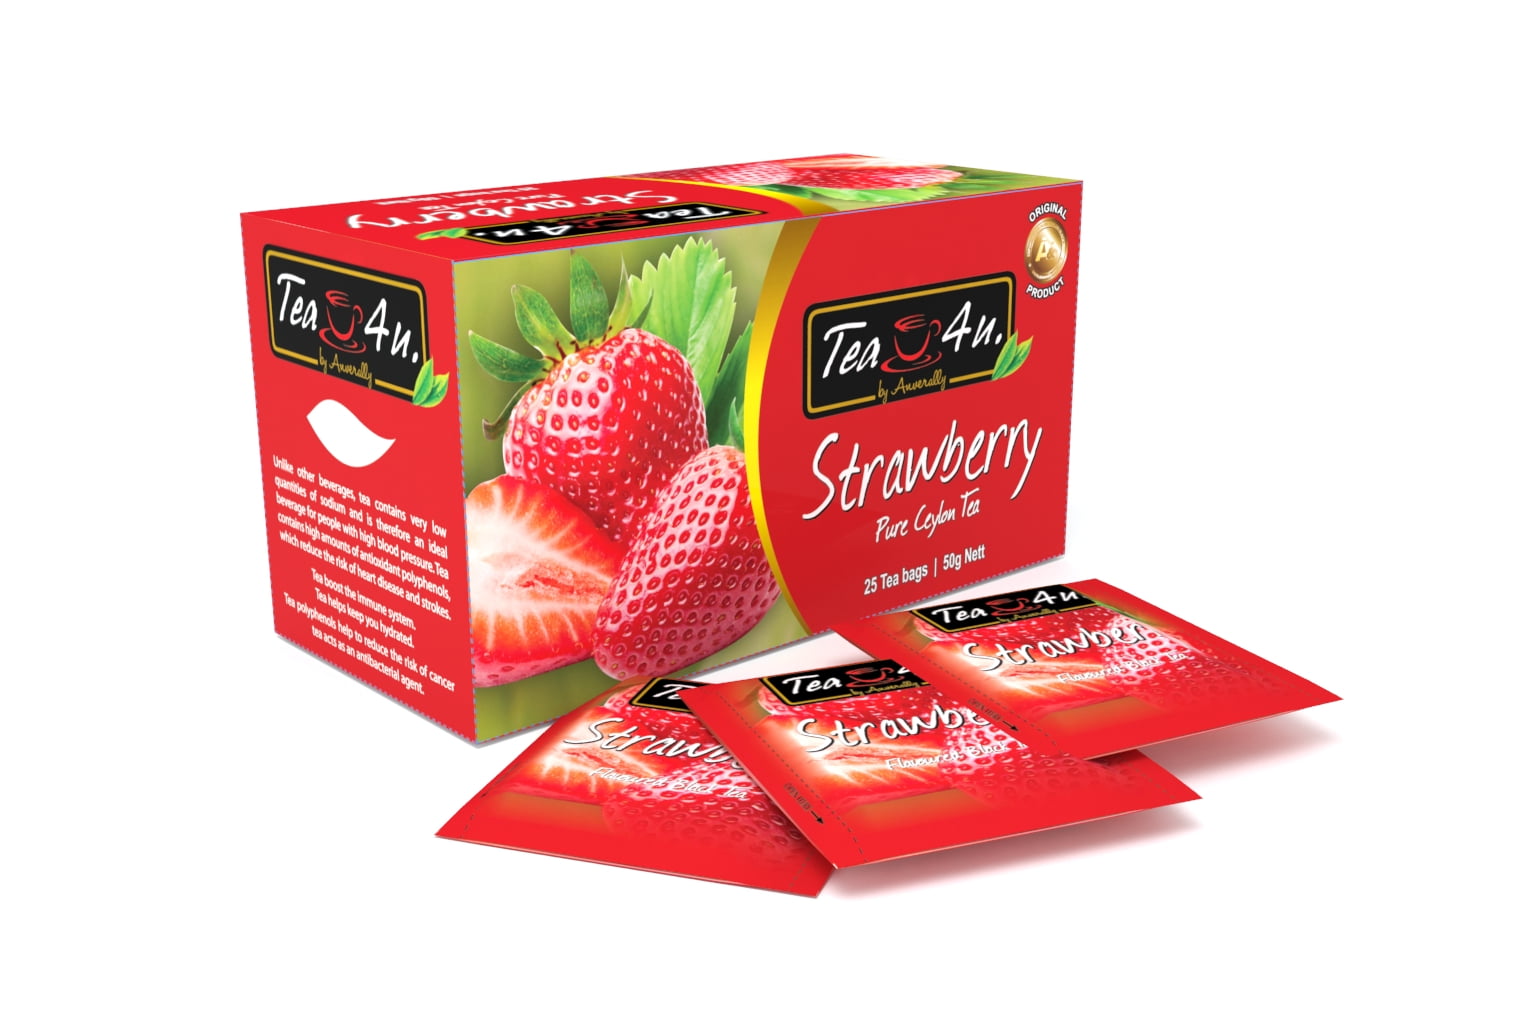 Tea4U Strawberry Black tea, Ceylon tea, box of 25 teabags - Walmart.com